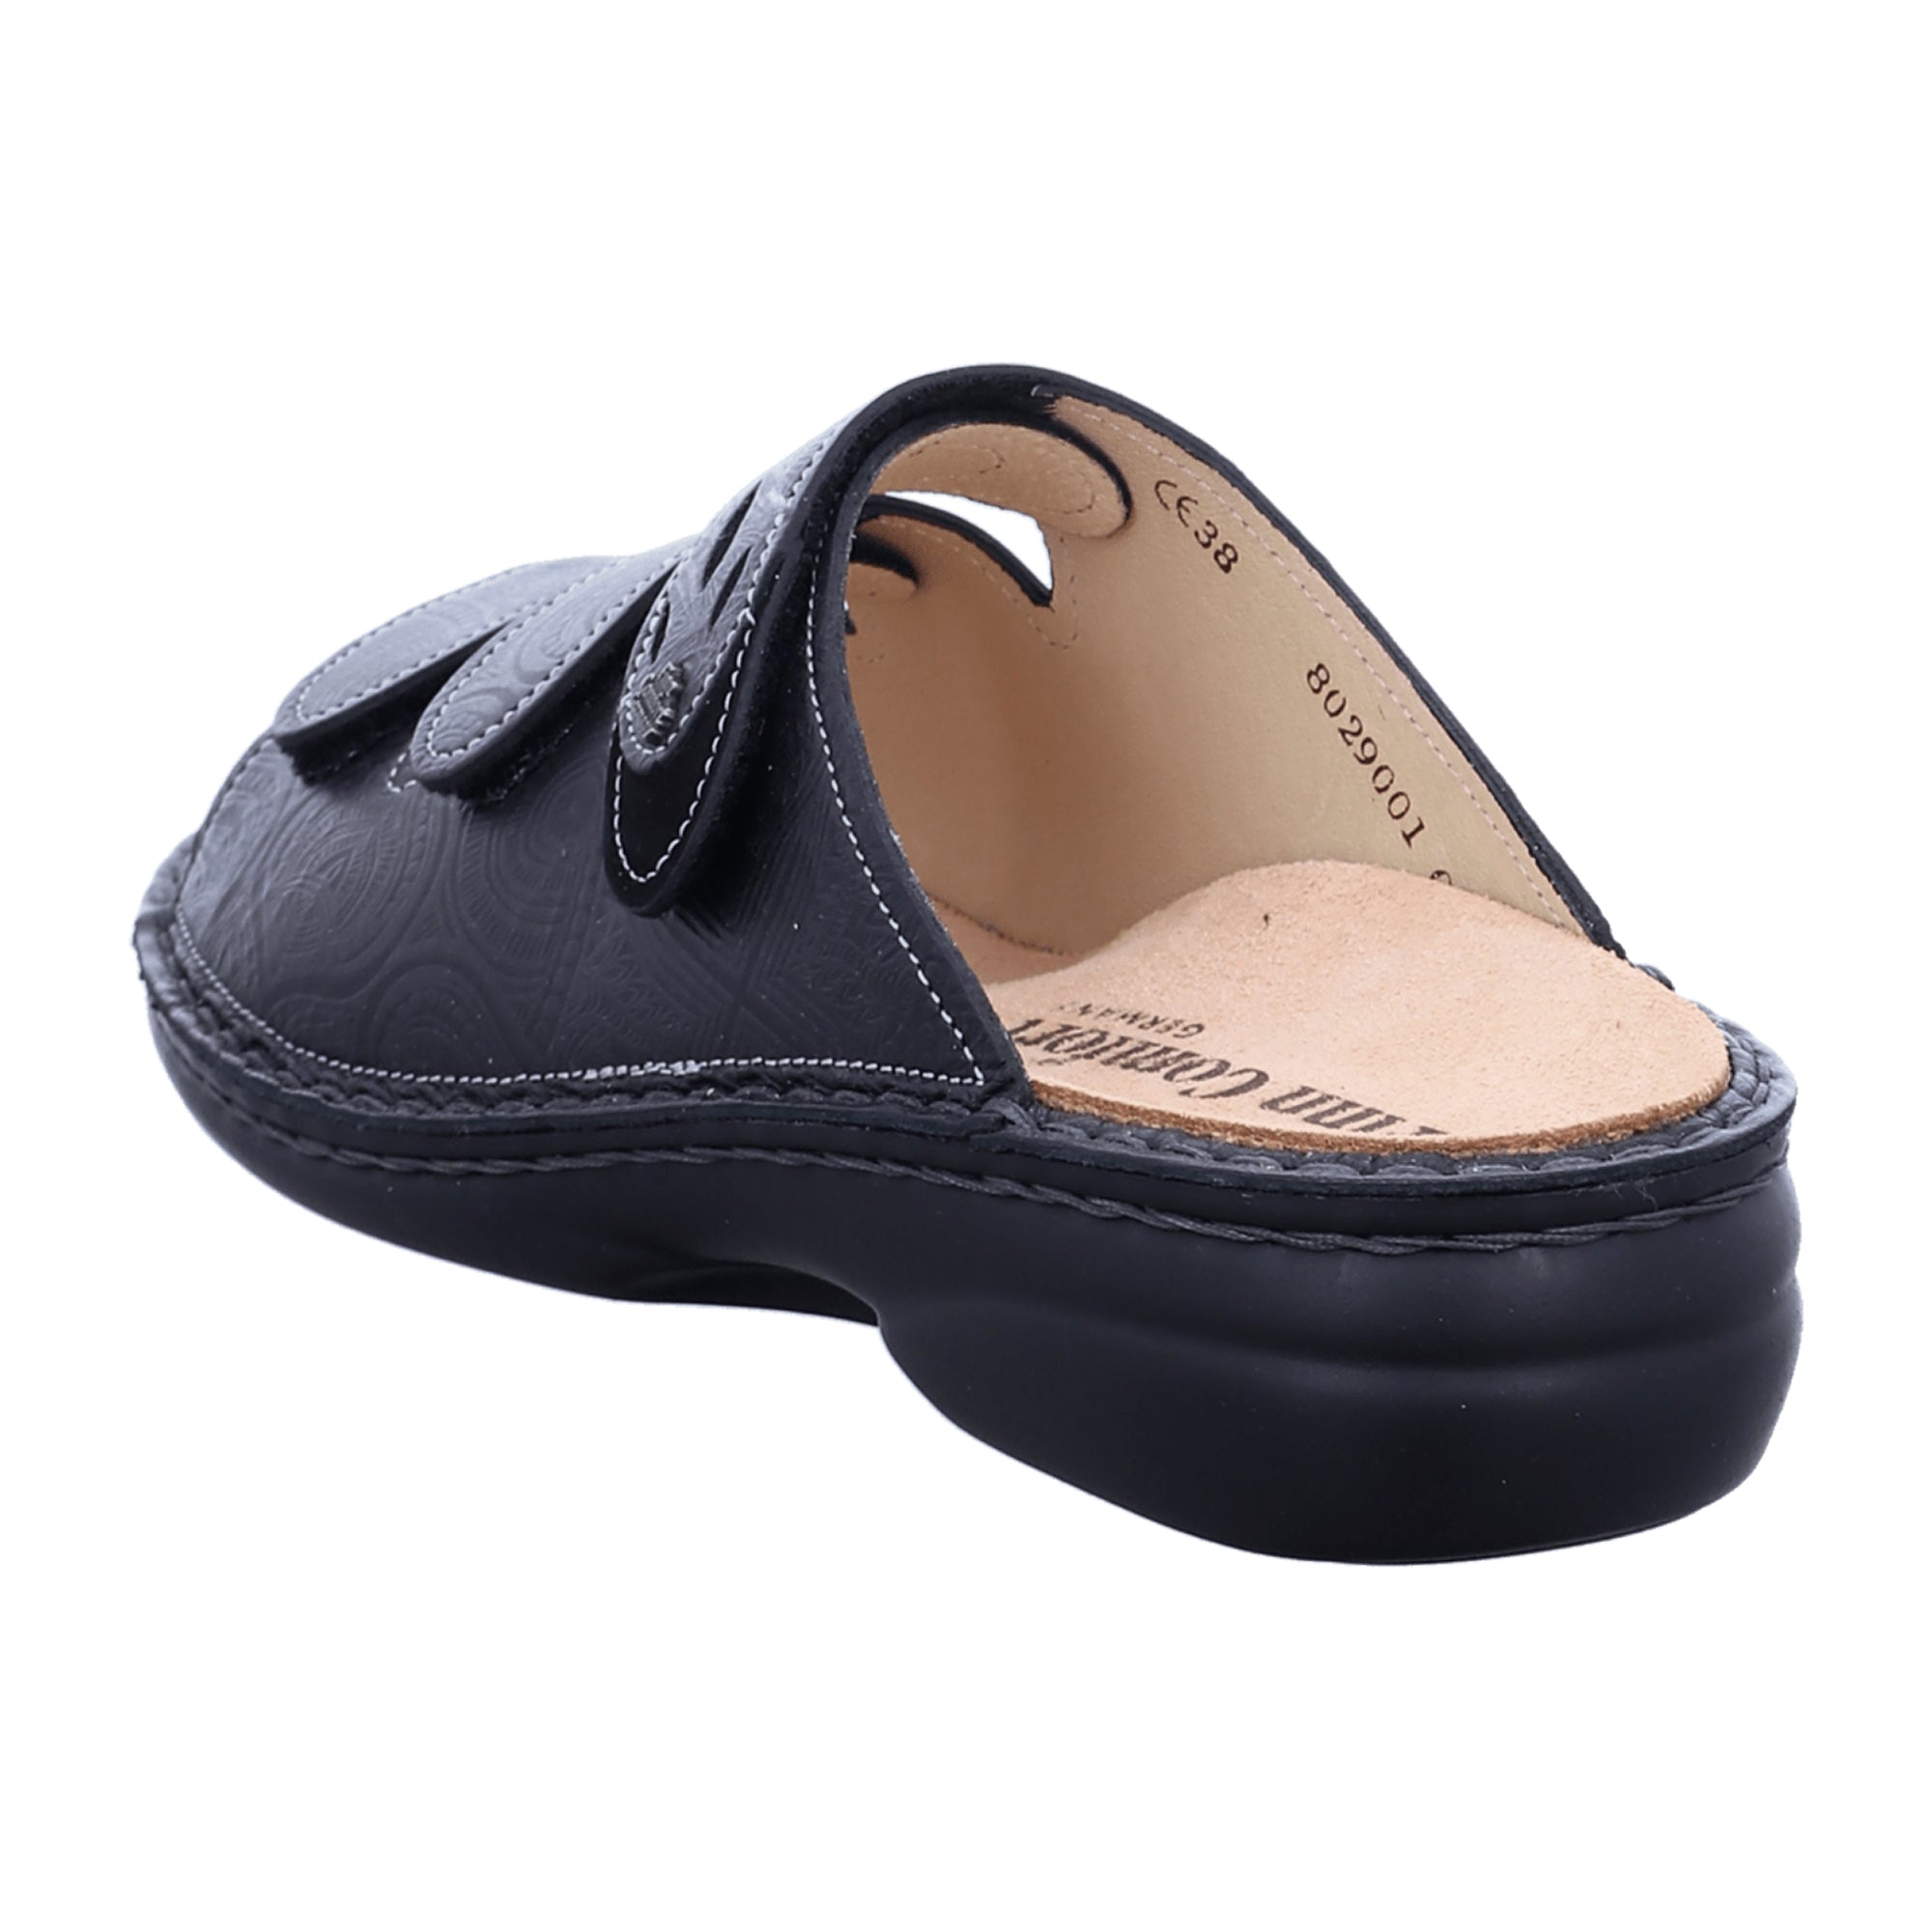 Finn Comfort Kos Women's Slide Sandals - Comfortable Black Leather Slides with Adjustable Straps and Soft Footbed